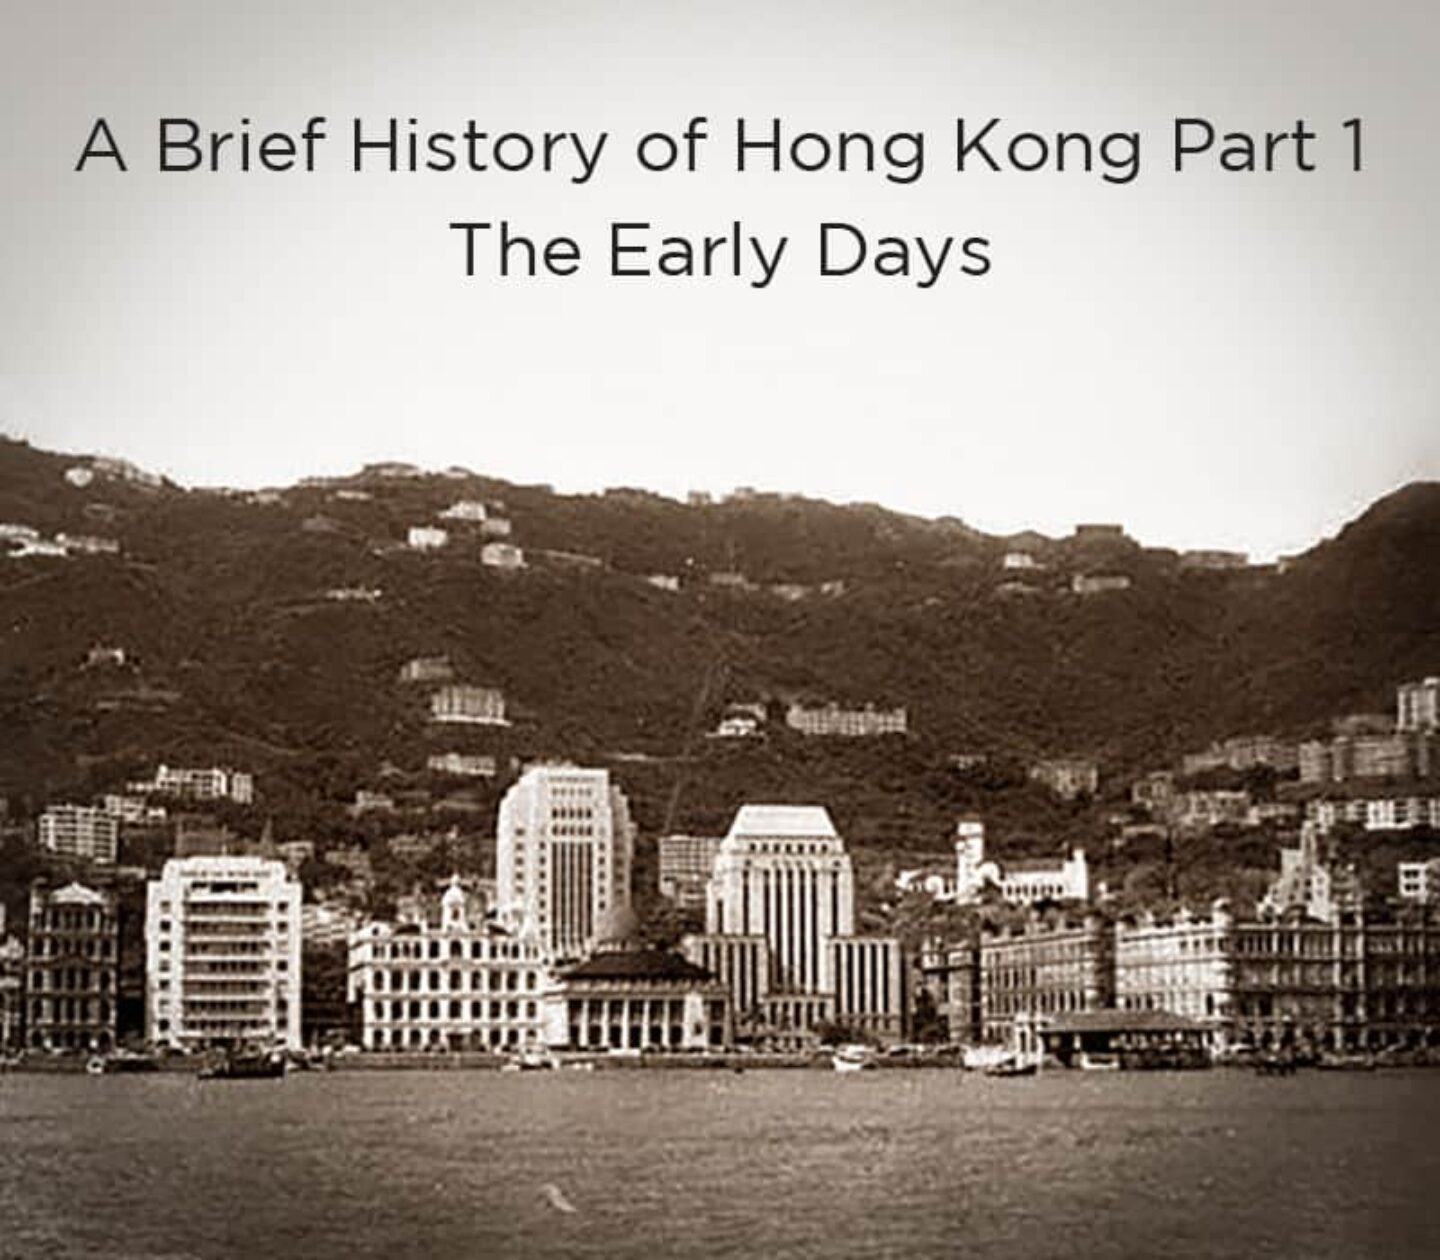 hong kong history essay topics